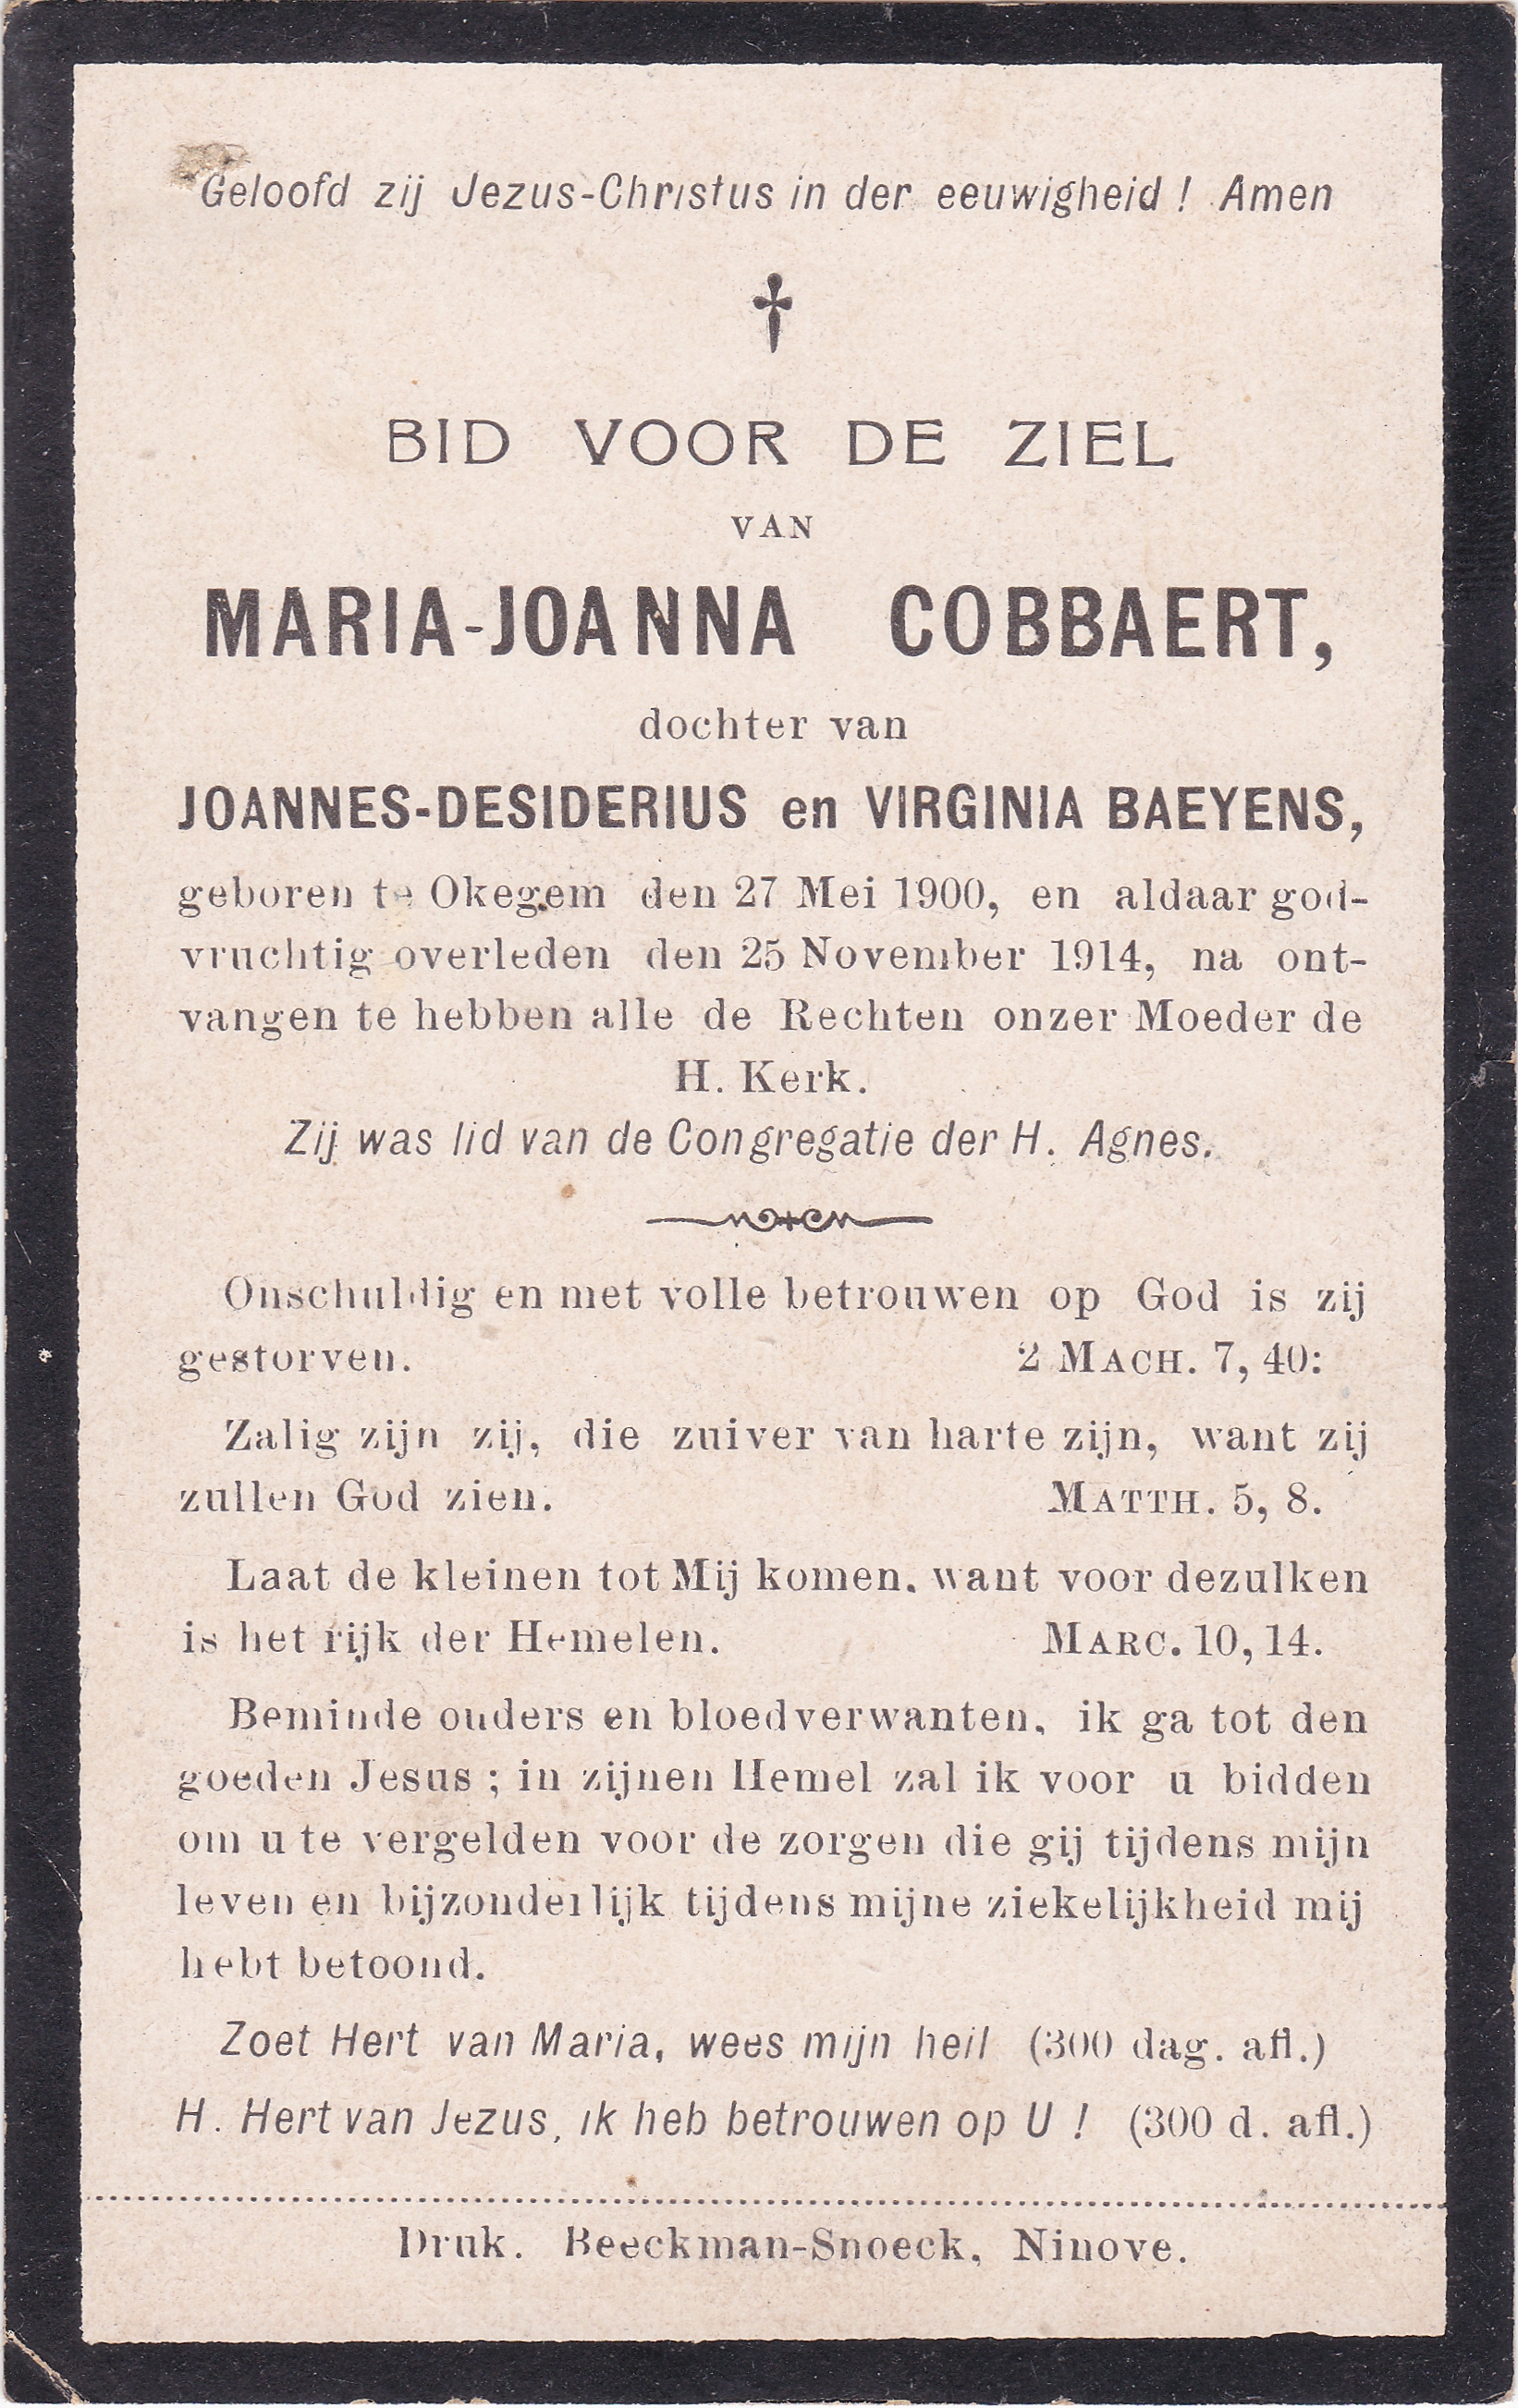 Cobbaert Maria Joanna